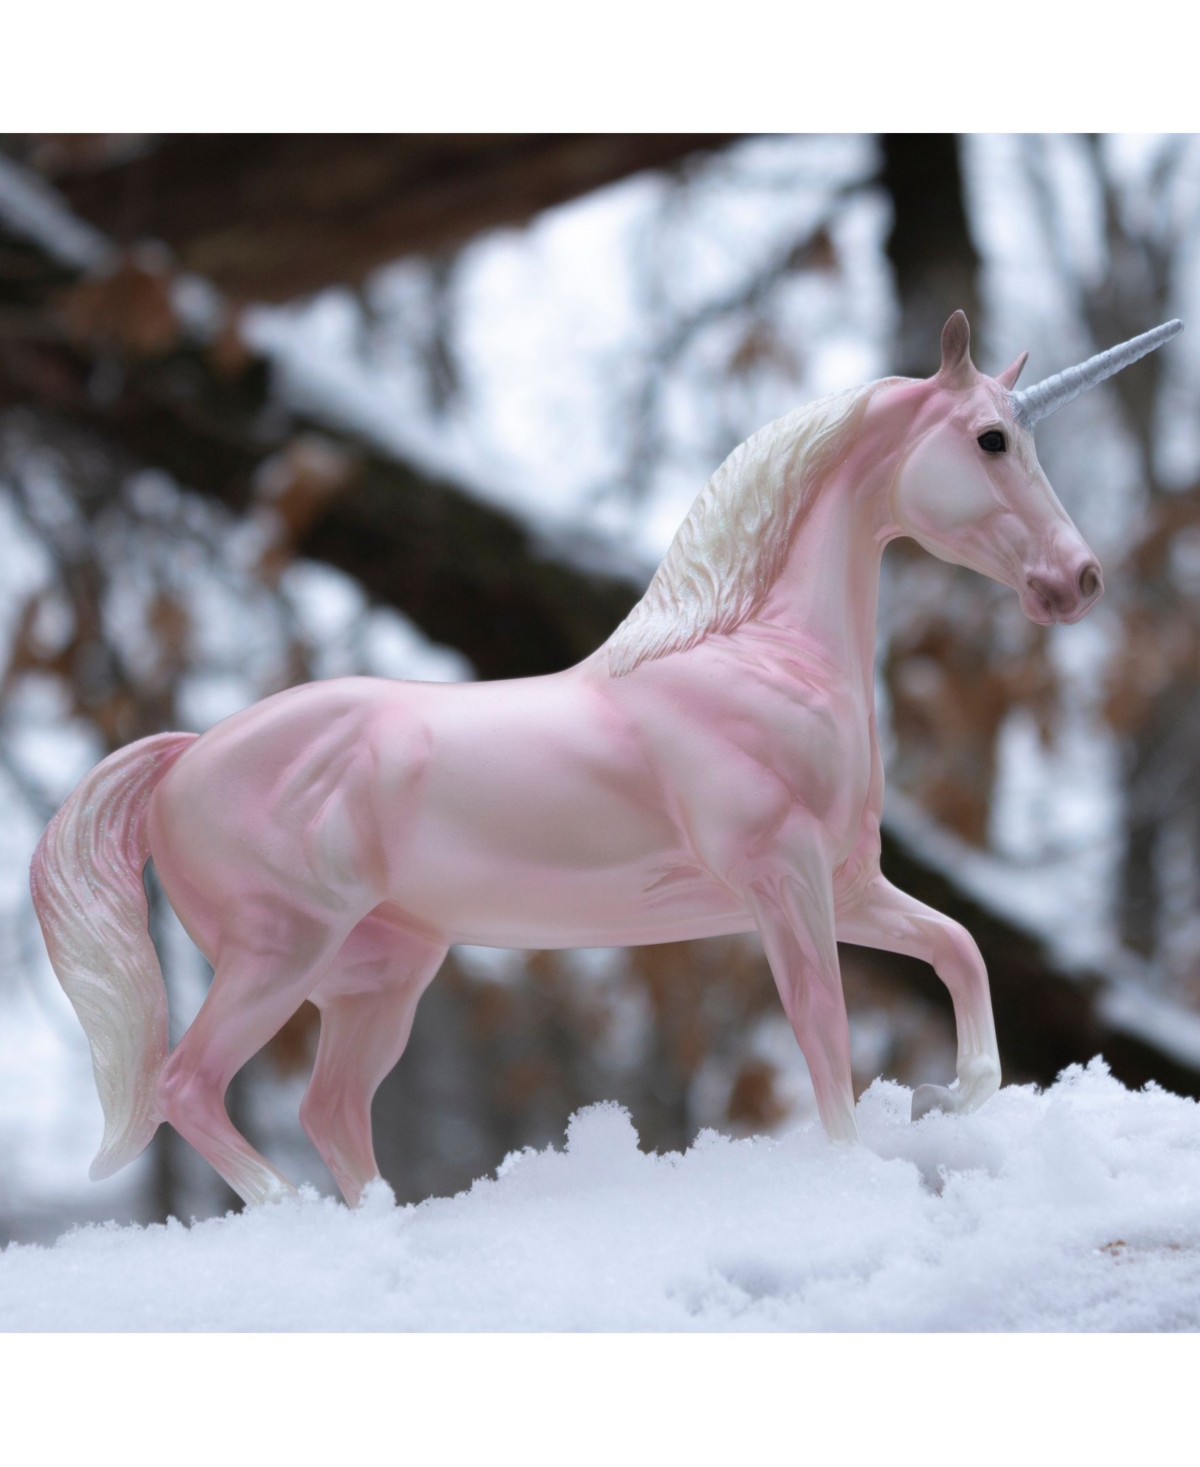 Shop Breyer Classics Freedom Series Aurora Unicorn Fantasy Horse Model Toy Figure In Multi